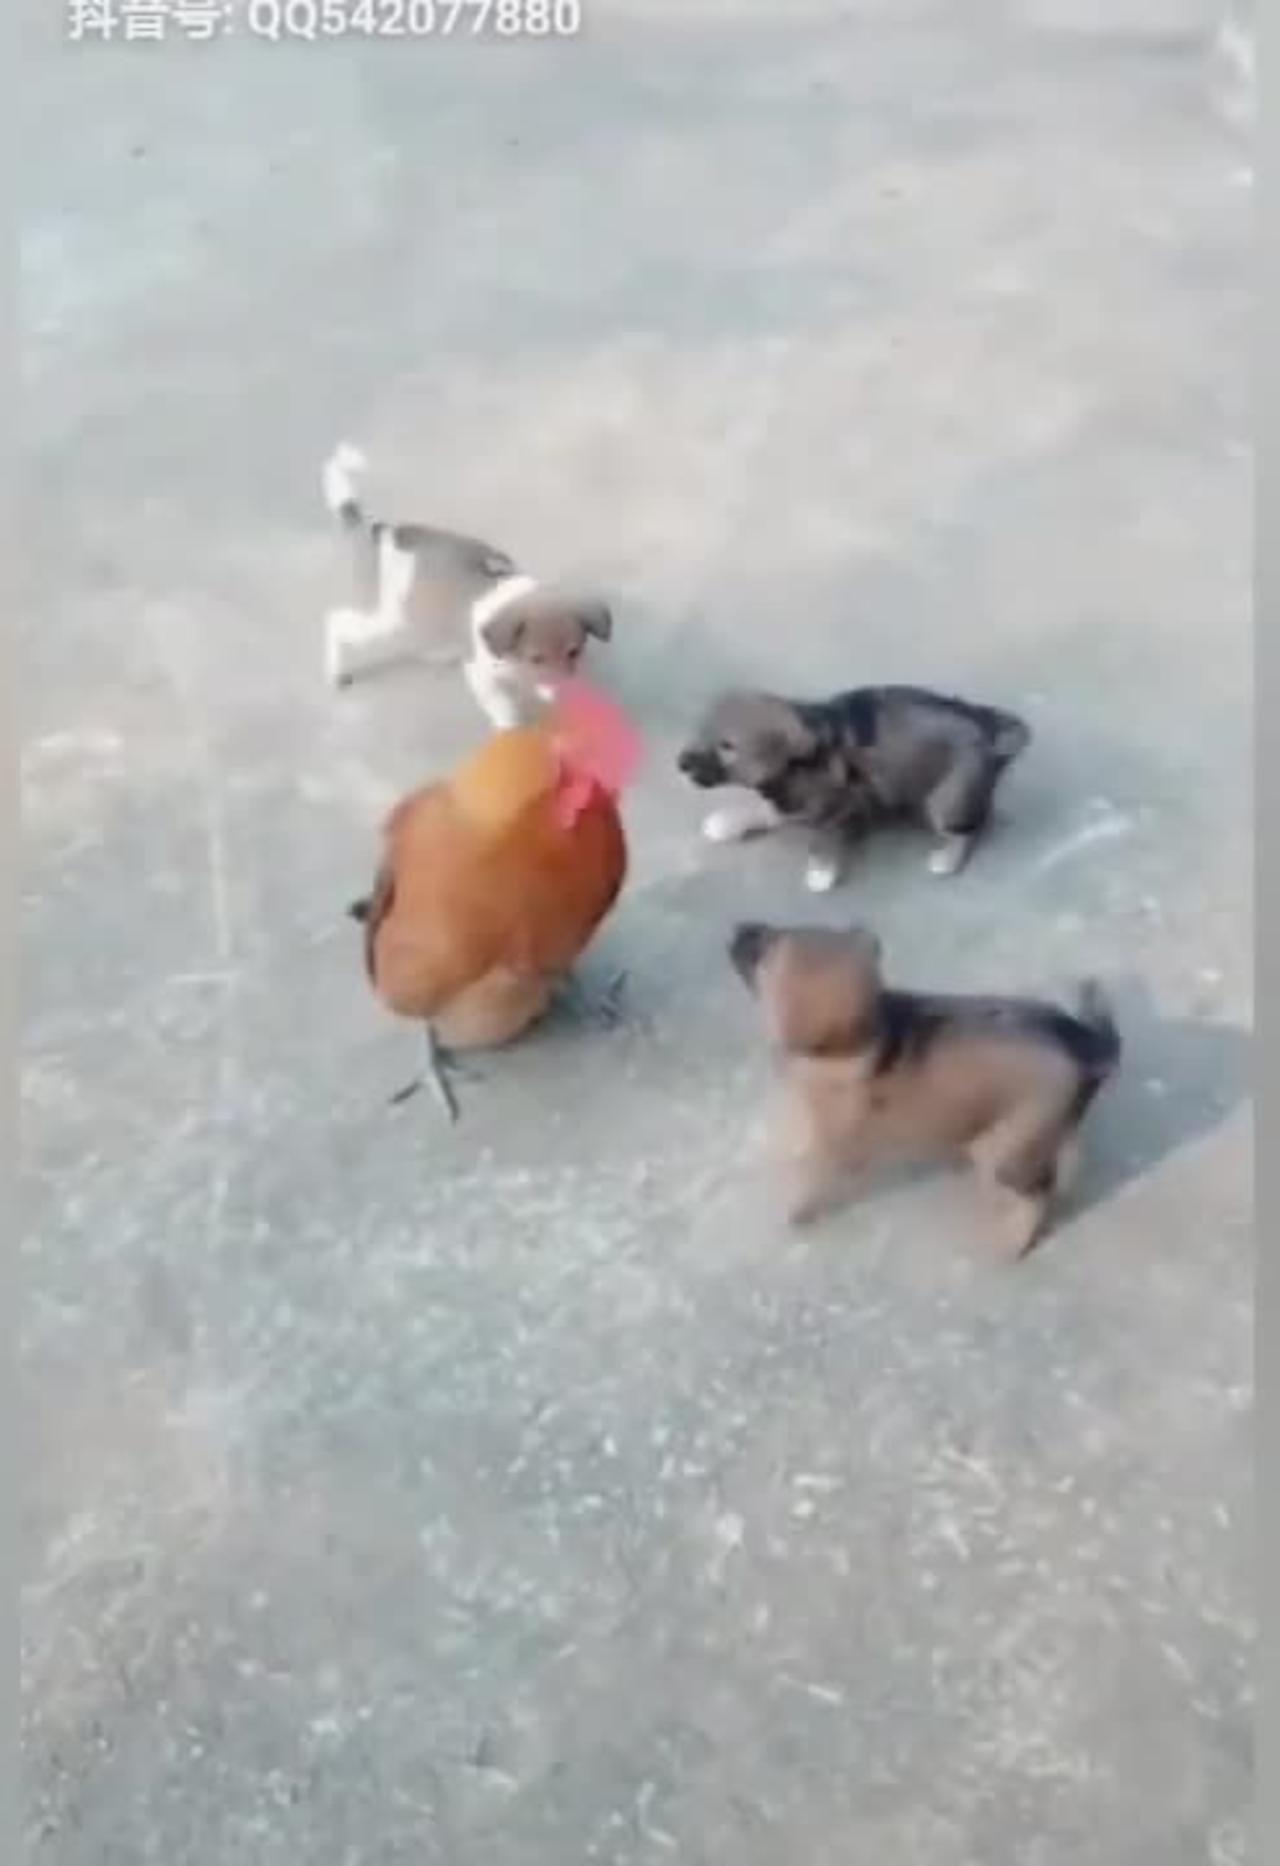 chicken Vs Dog fight